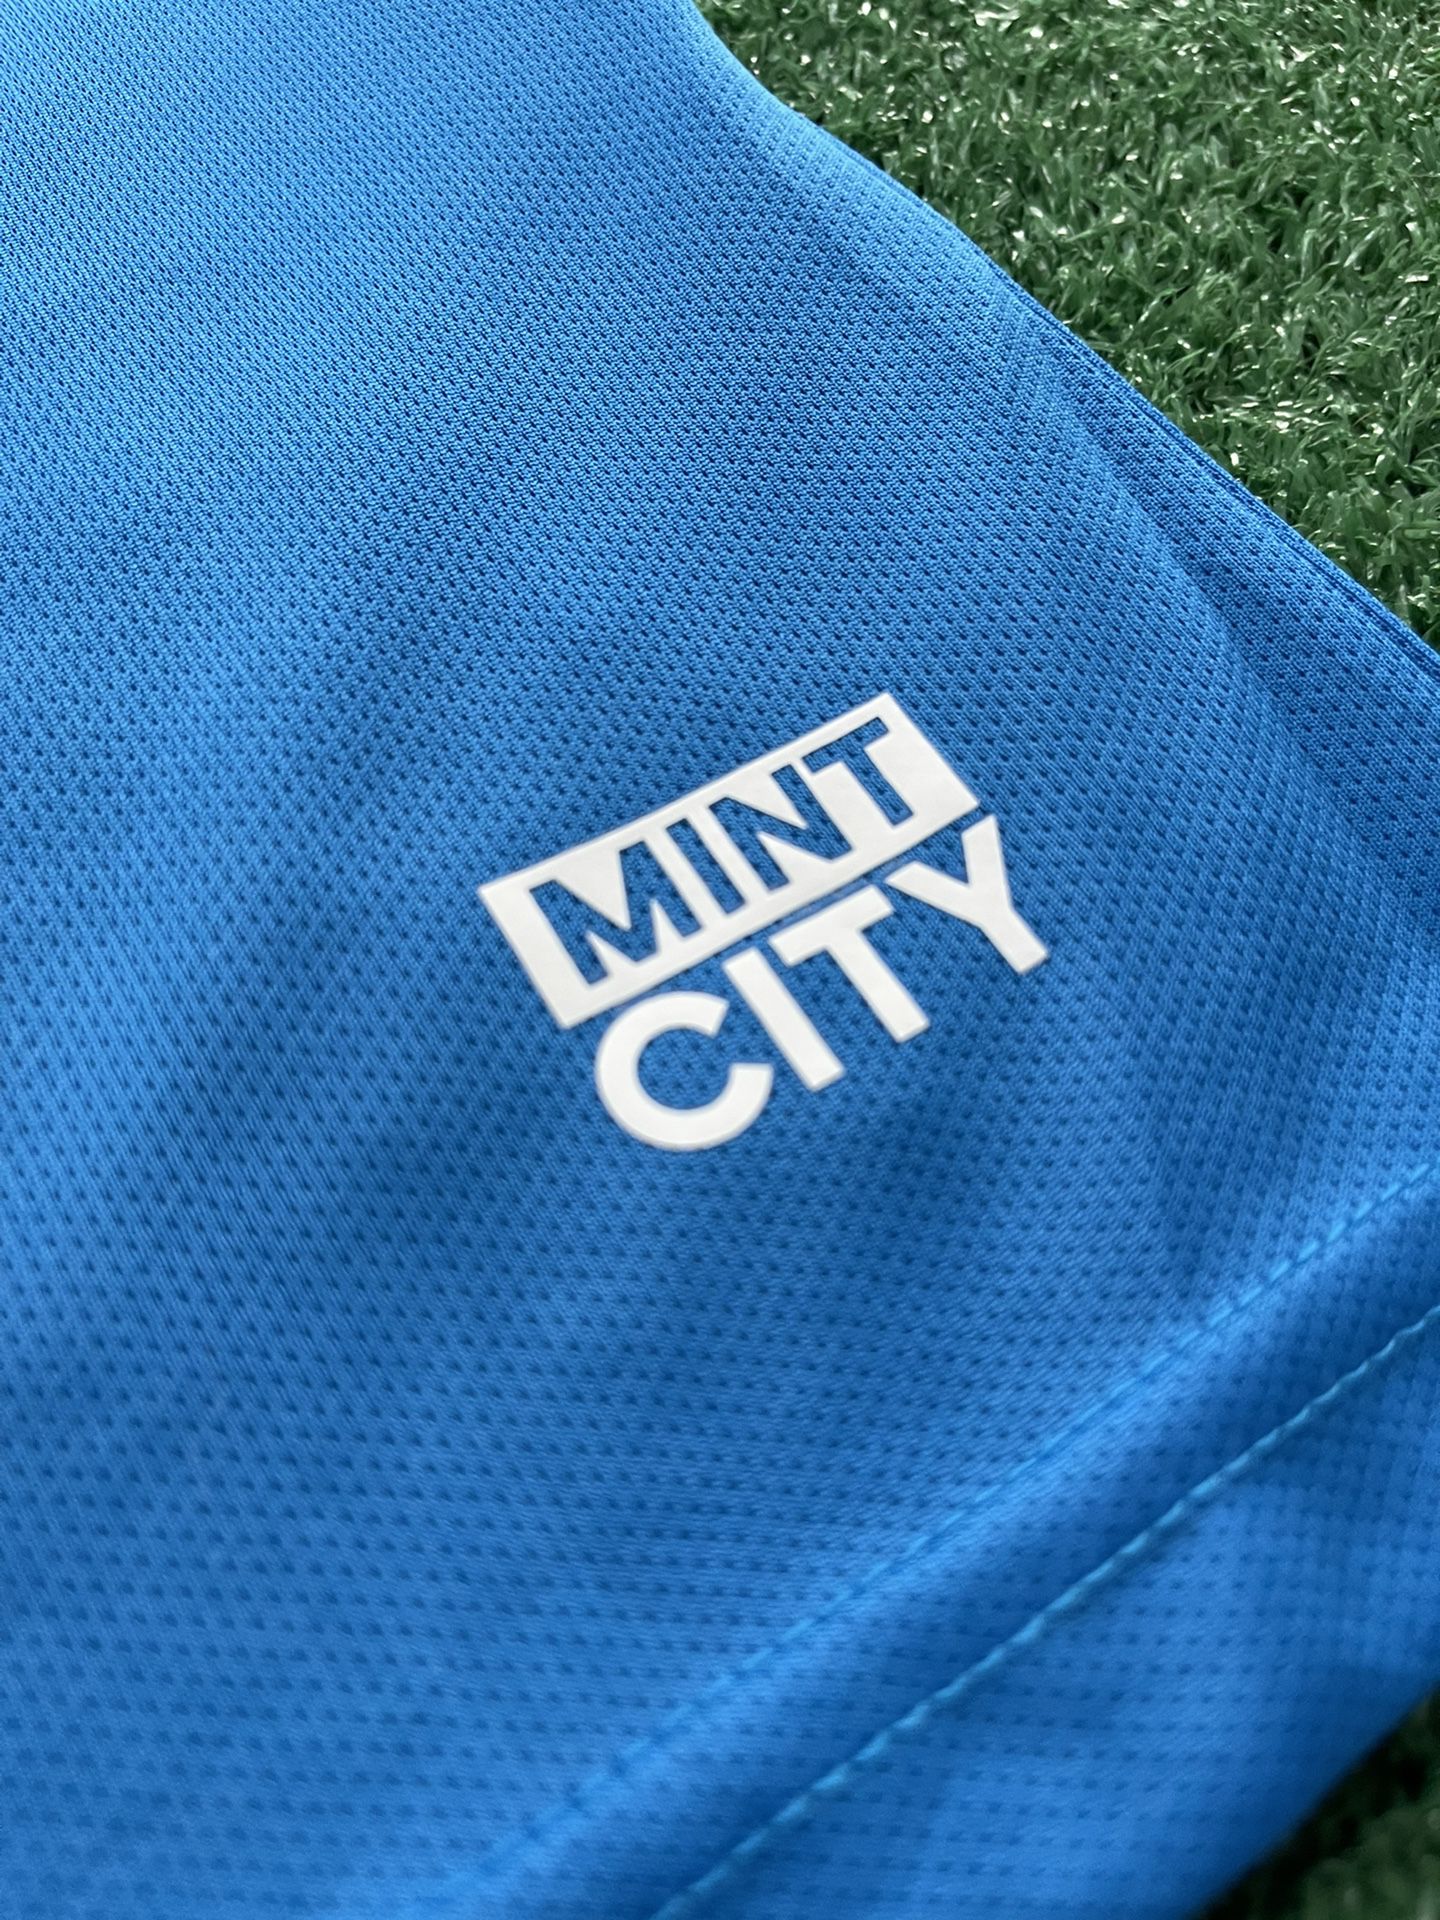 mikejonesnc paired his custom Charlotte FC jersey last Saturday